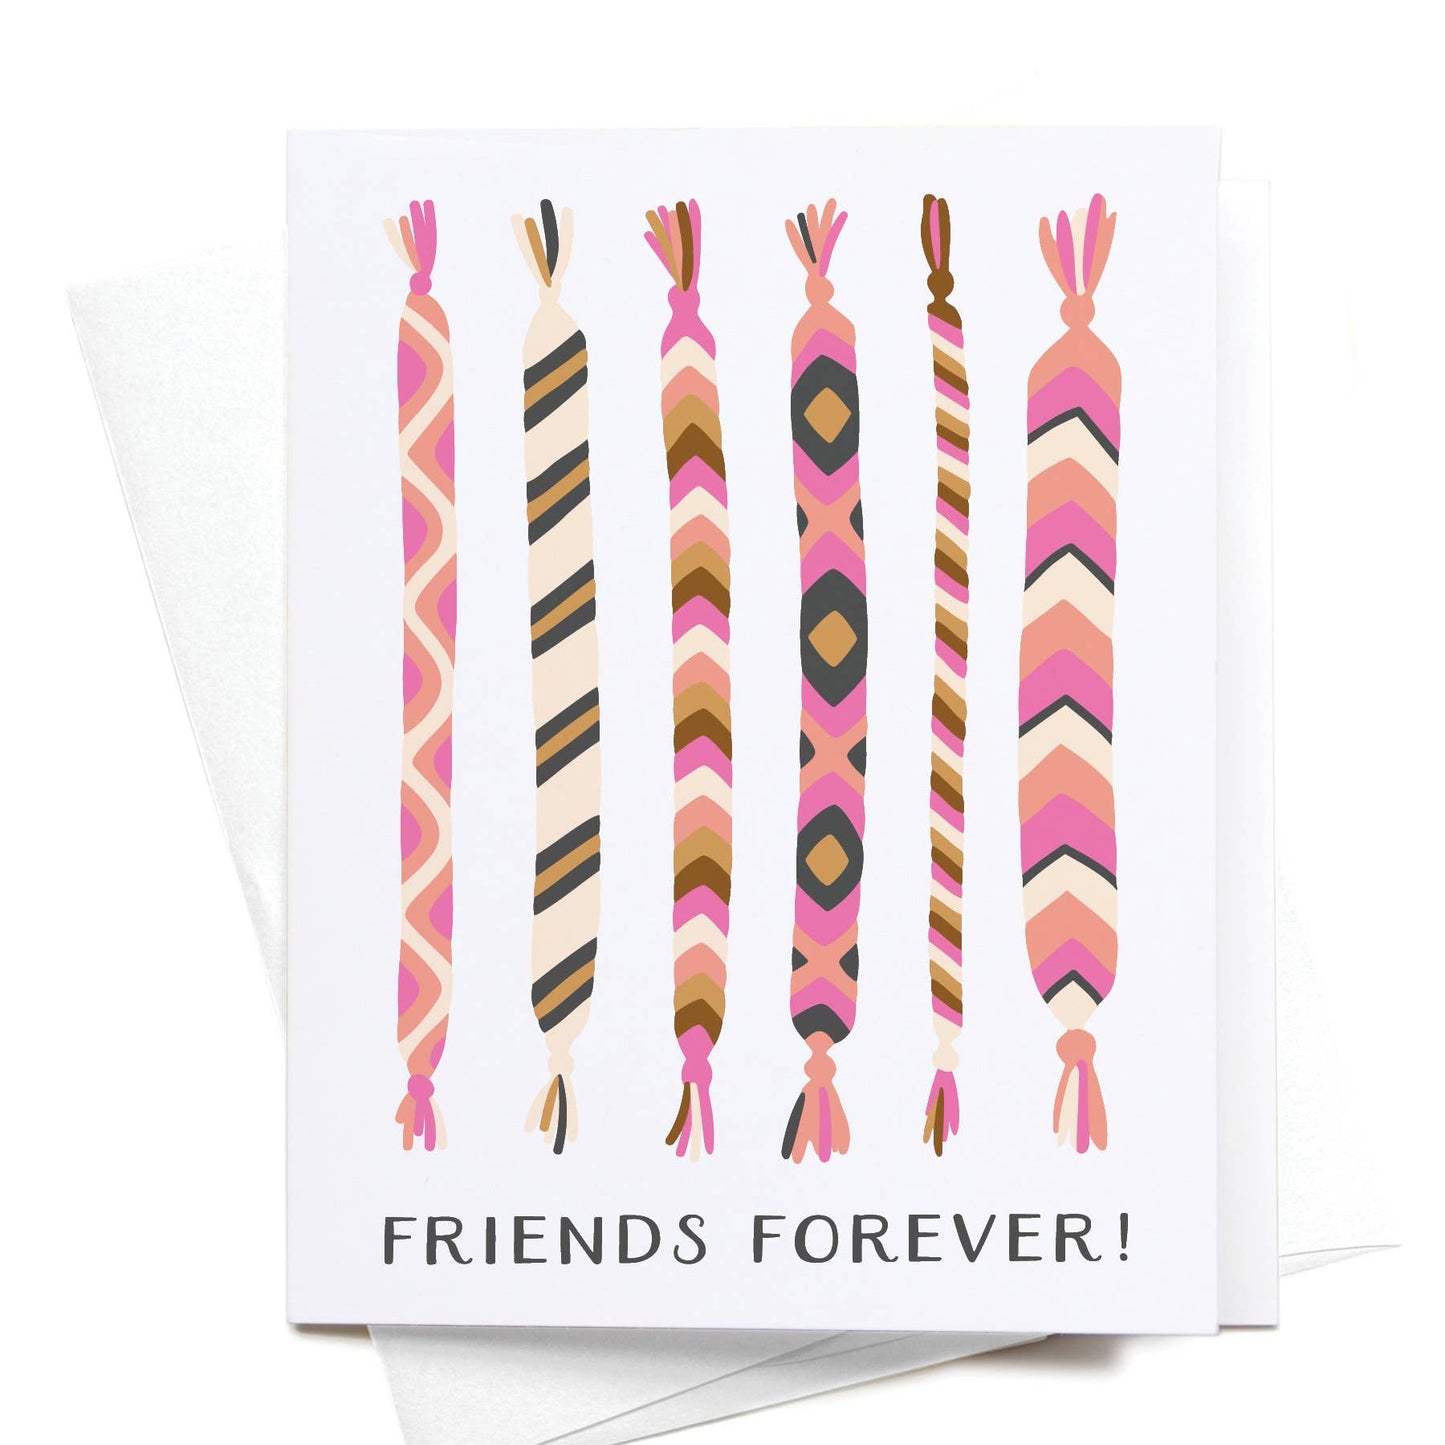 "Friends Forever!" Friendship Bracelets Greeting Card